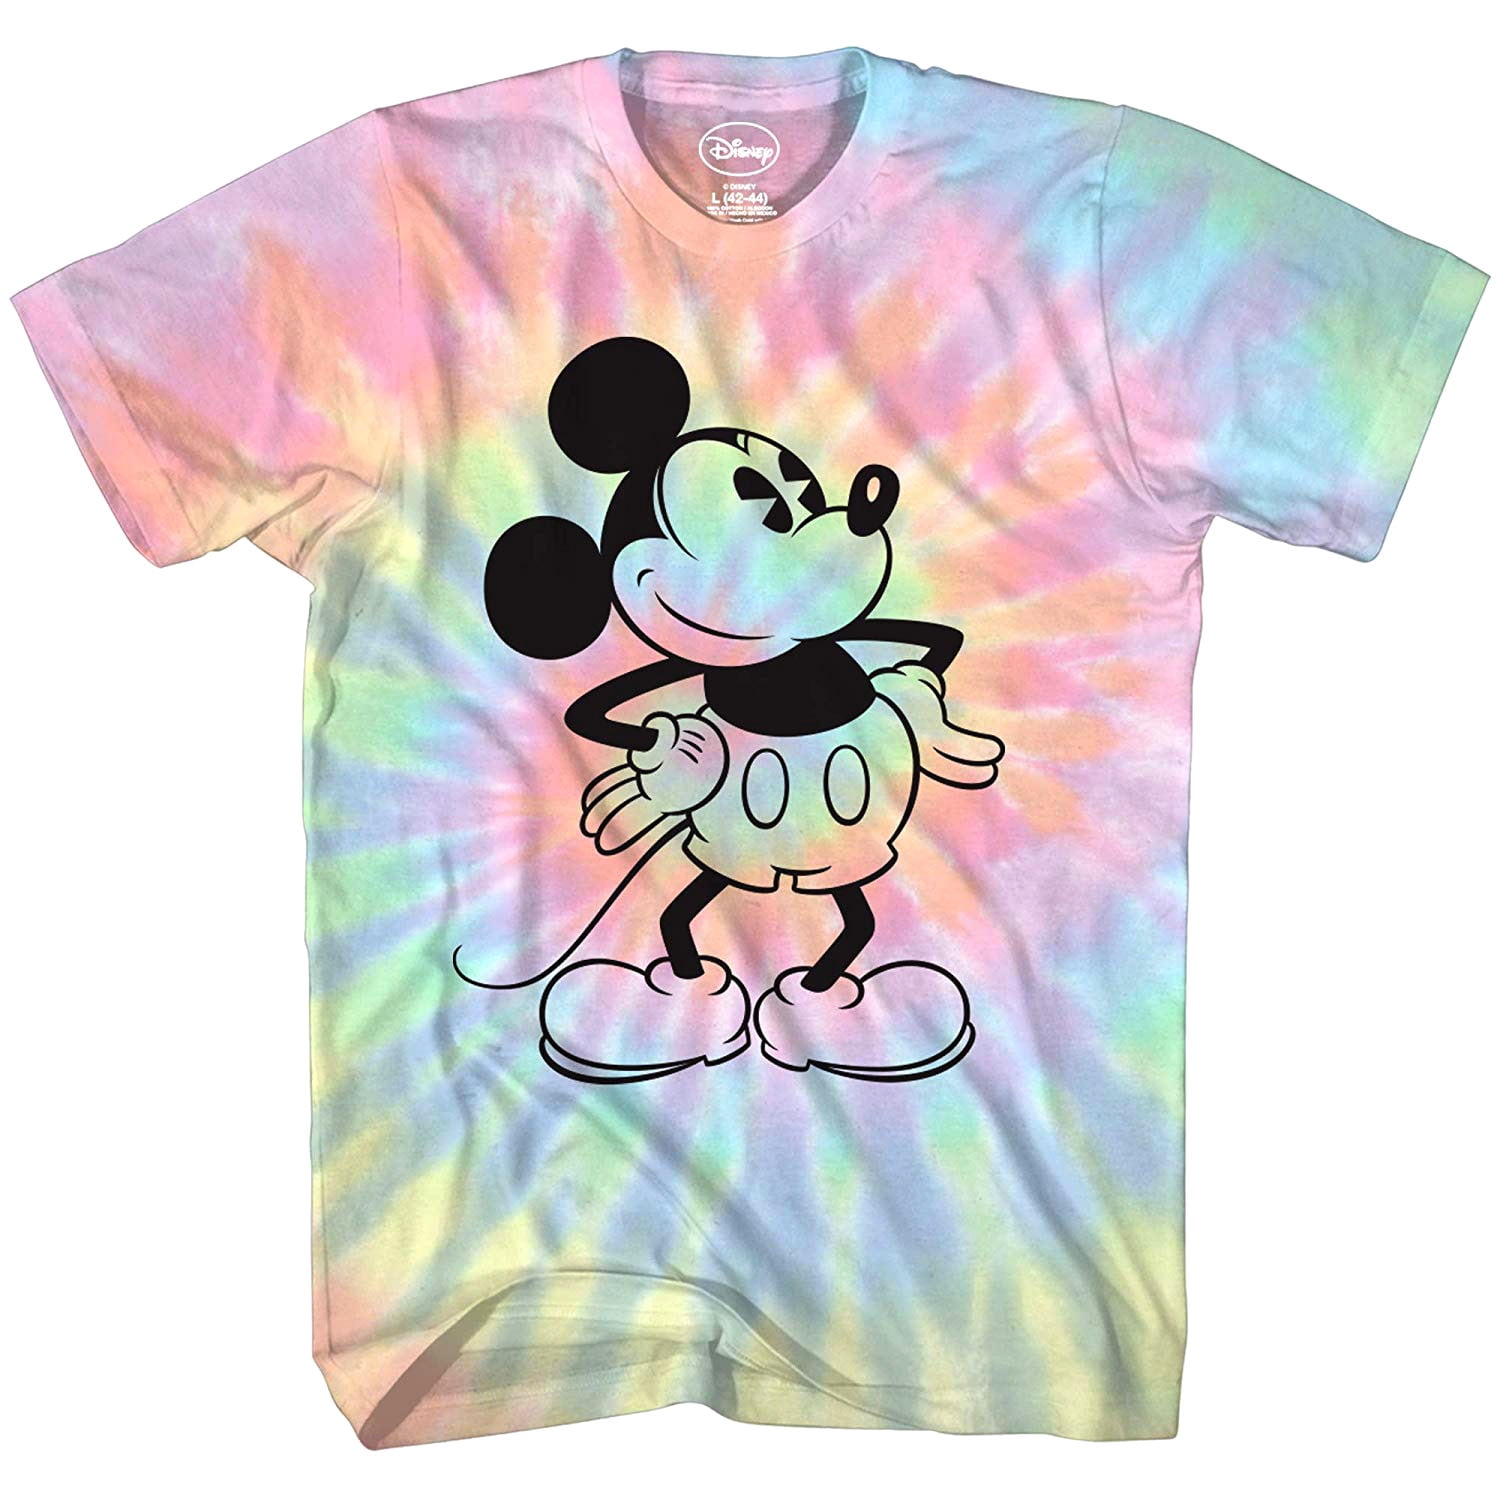 Disney  Minnie Mouse  Engagement  Wedding  I Do  Disney World  Disneyland  Mickey  Matching  T-Shirt  T Shirt  Shirt  Tee  Tank